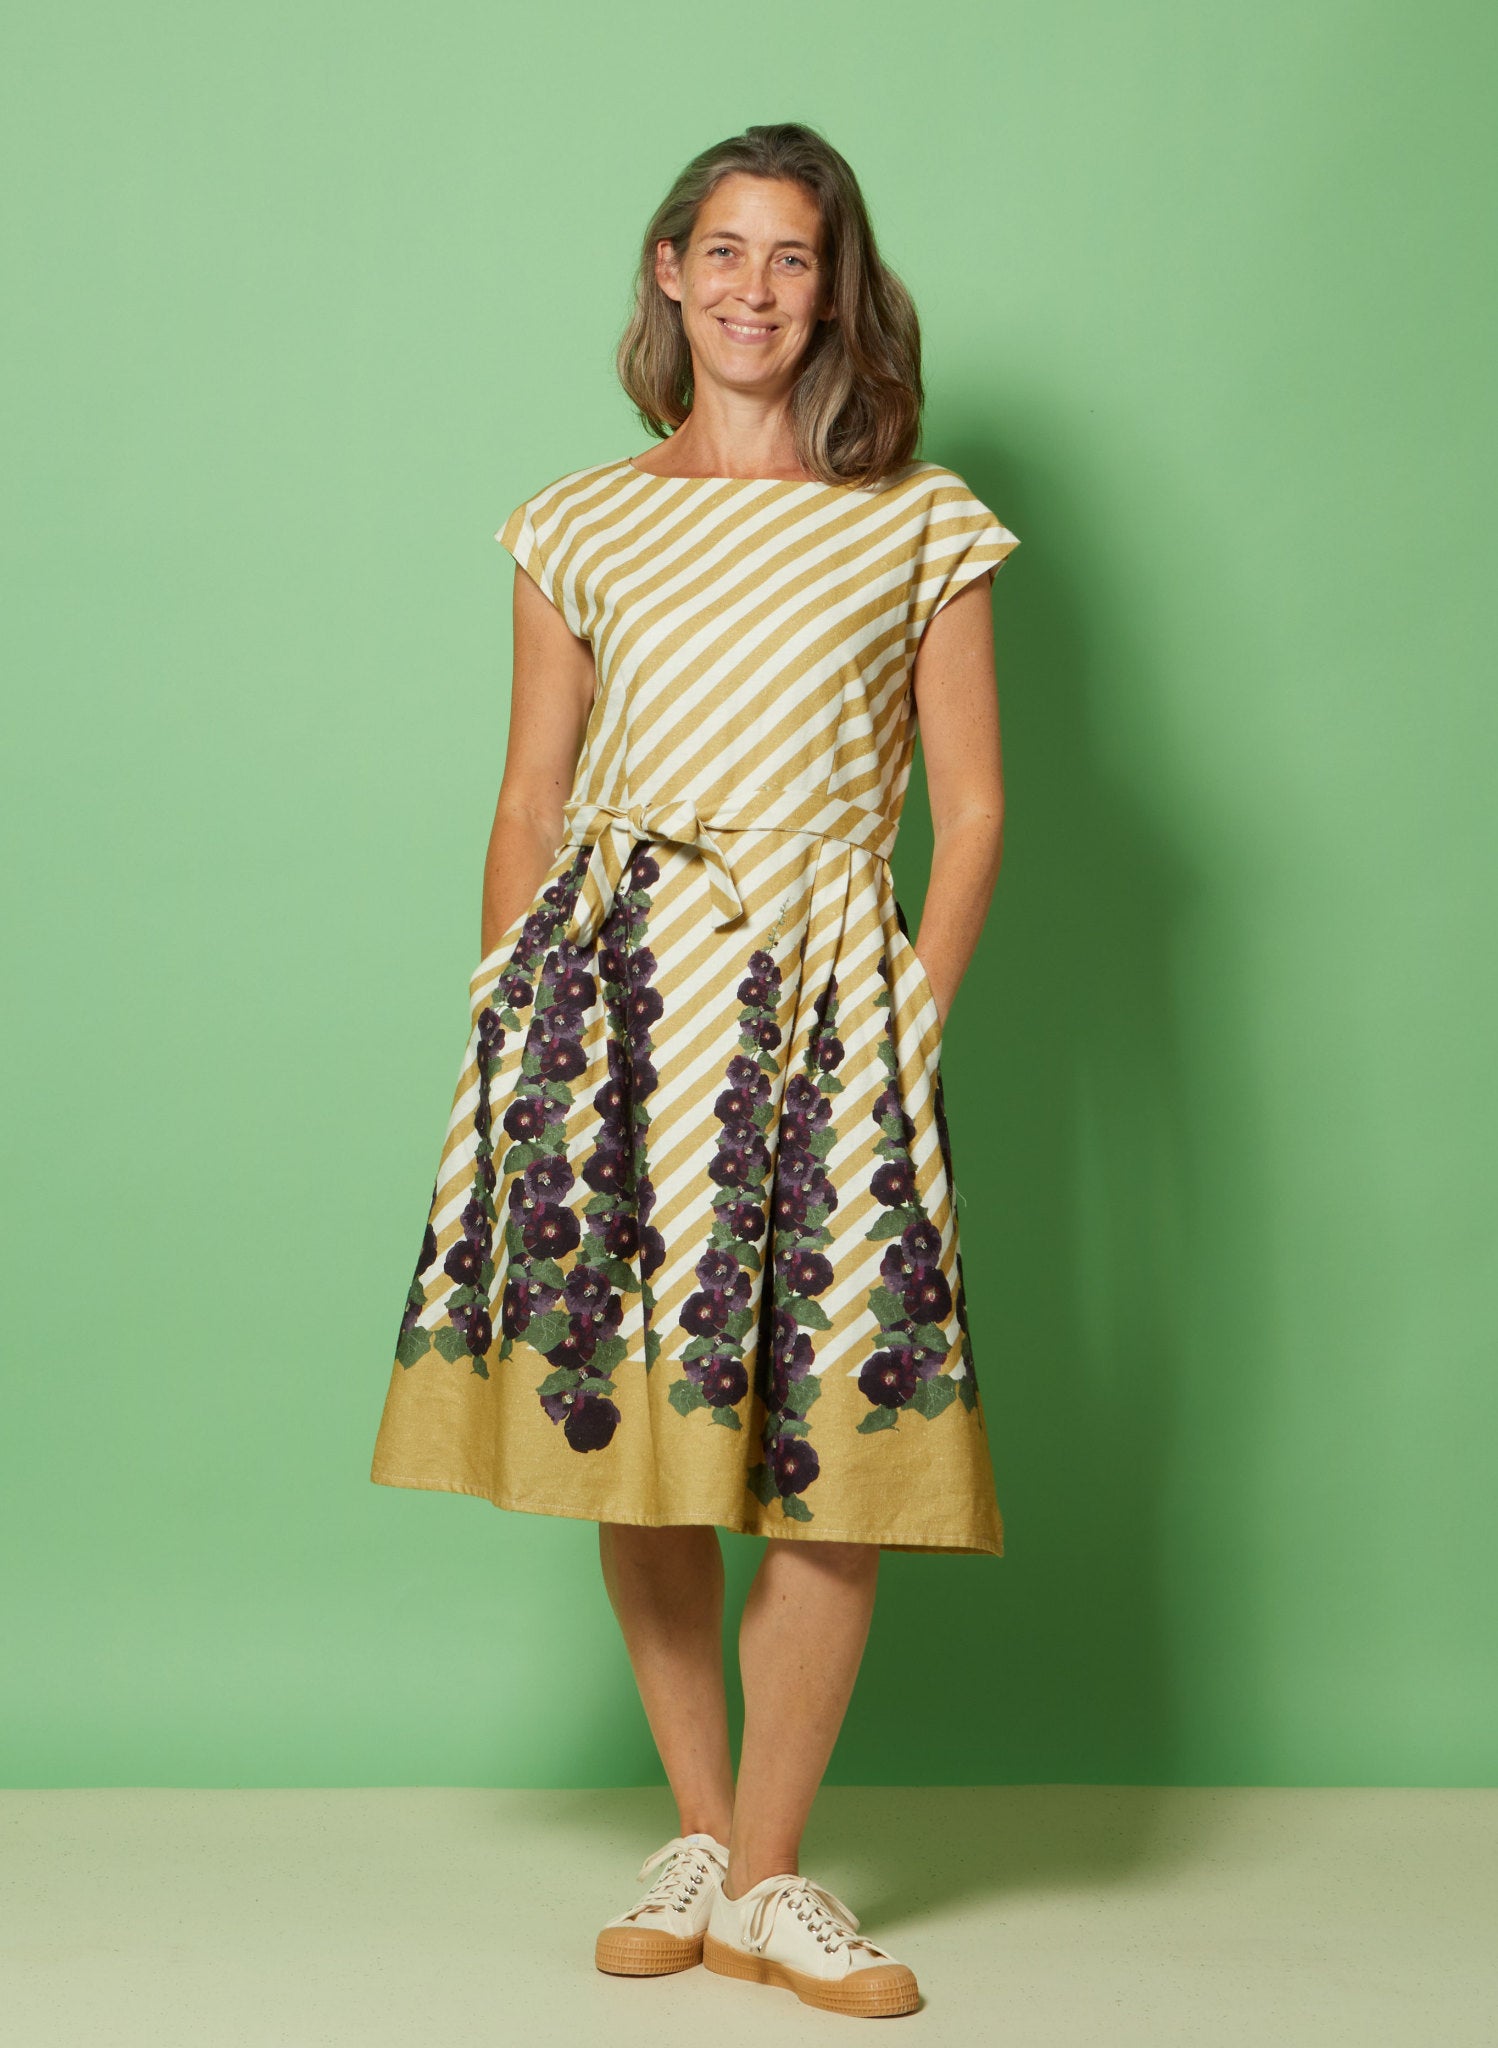 Beatrice Cap - Mustard Hollyhocks Dress